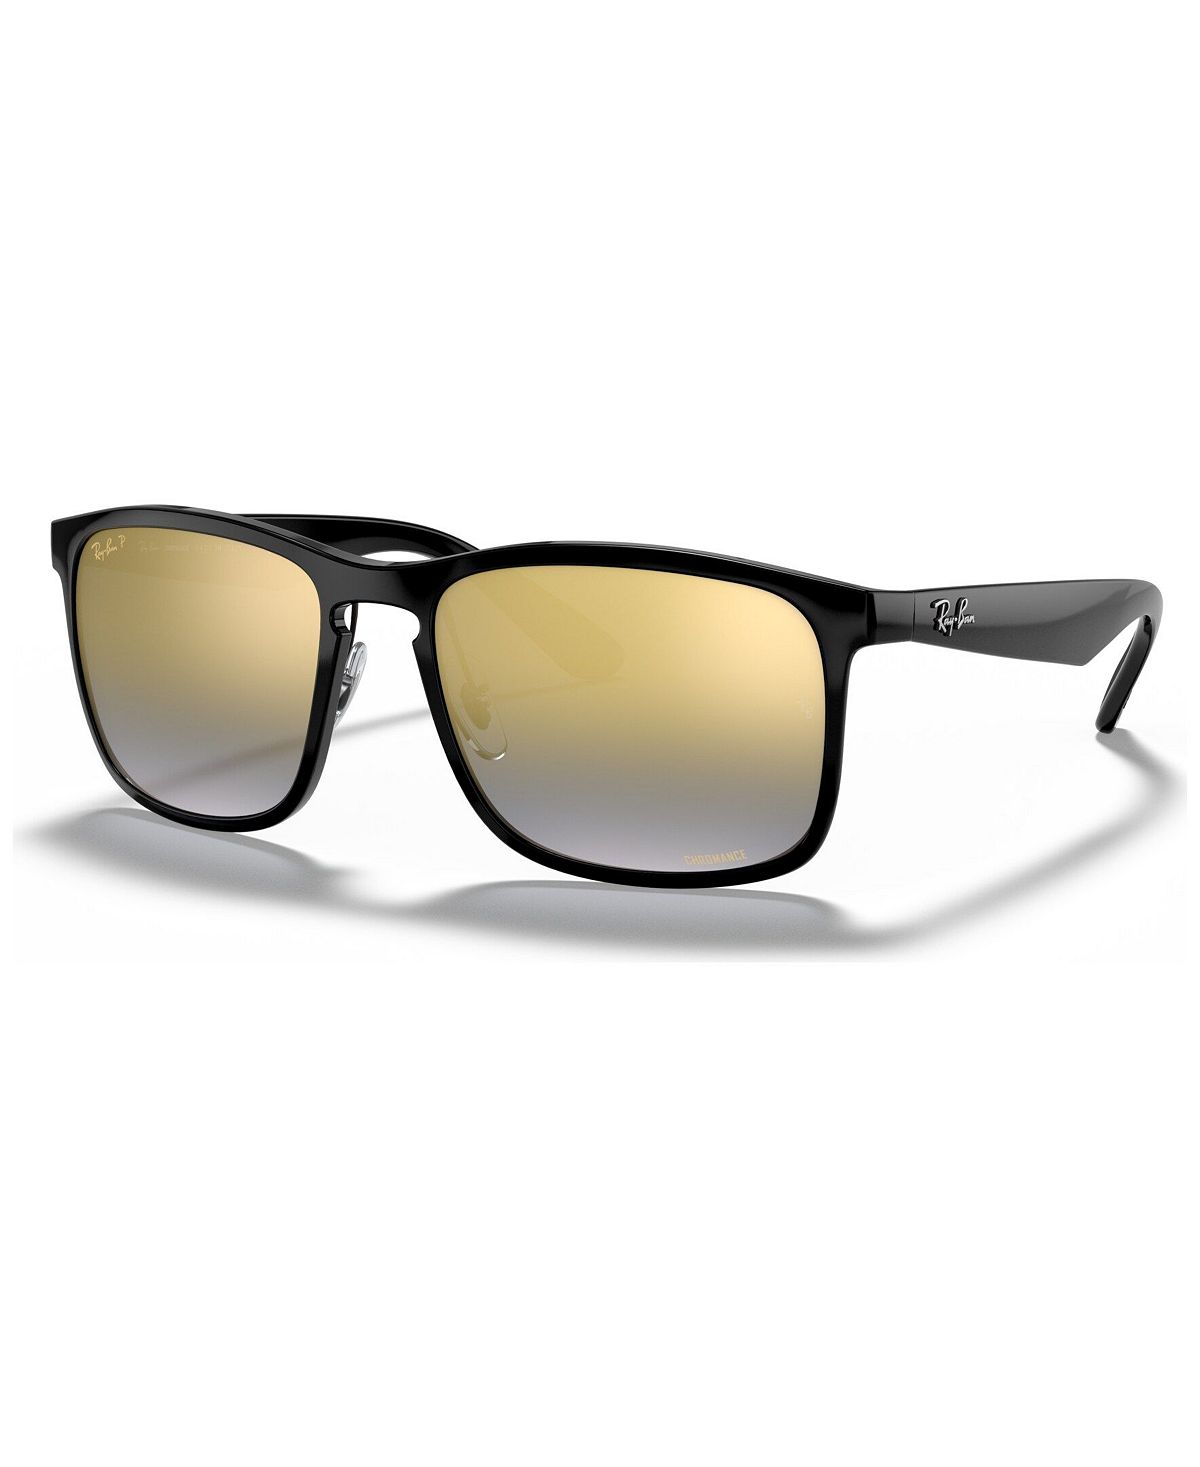 Поляризационные солнцезащитные очки, RB4264 58 Ray-Ban 1 pair black gold blue men